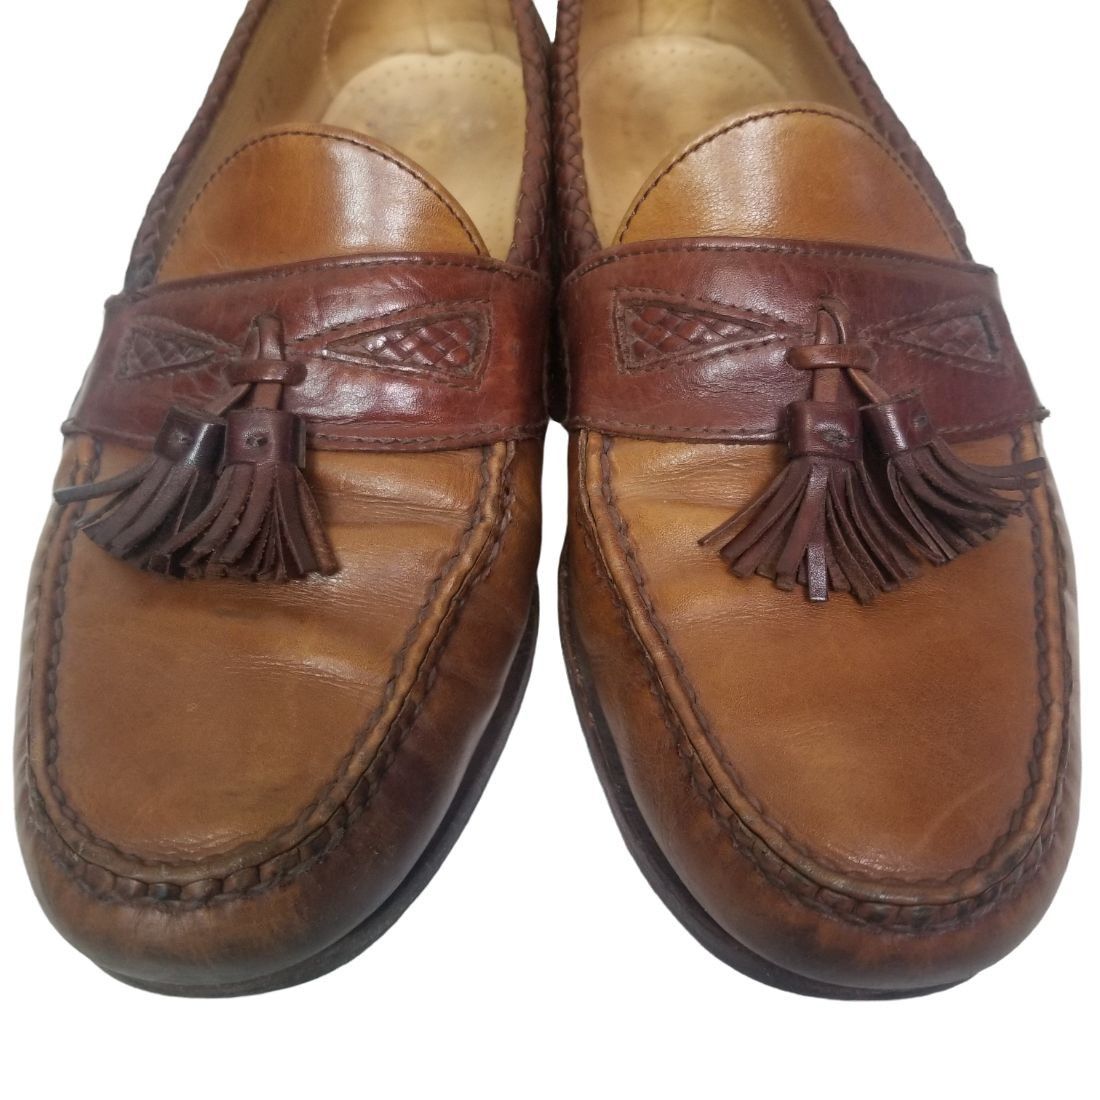 Allen Edmonds Allen Edmonds Leather Closed Toe Slip On Maxfield Loafers Size US 12 / EU 45 - 3 Thumbnail